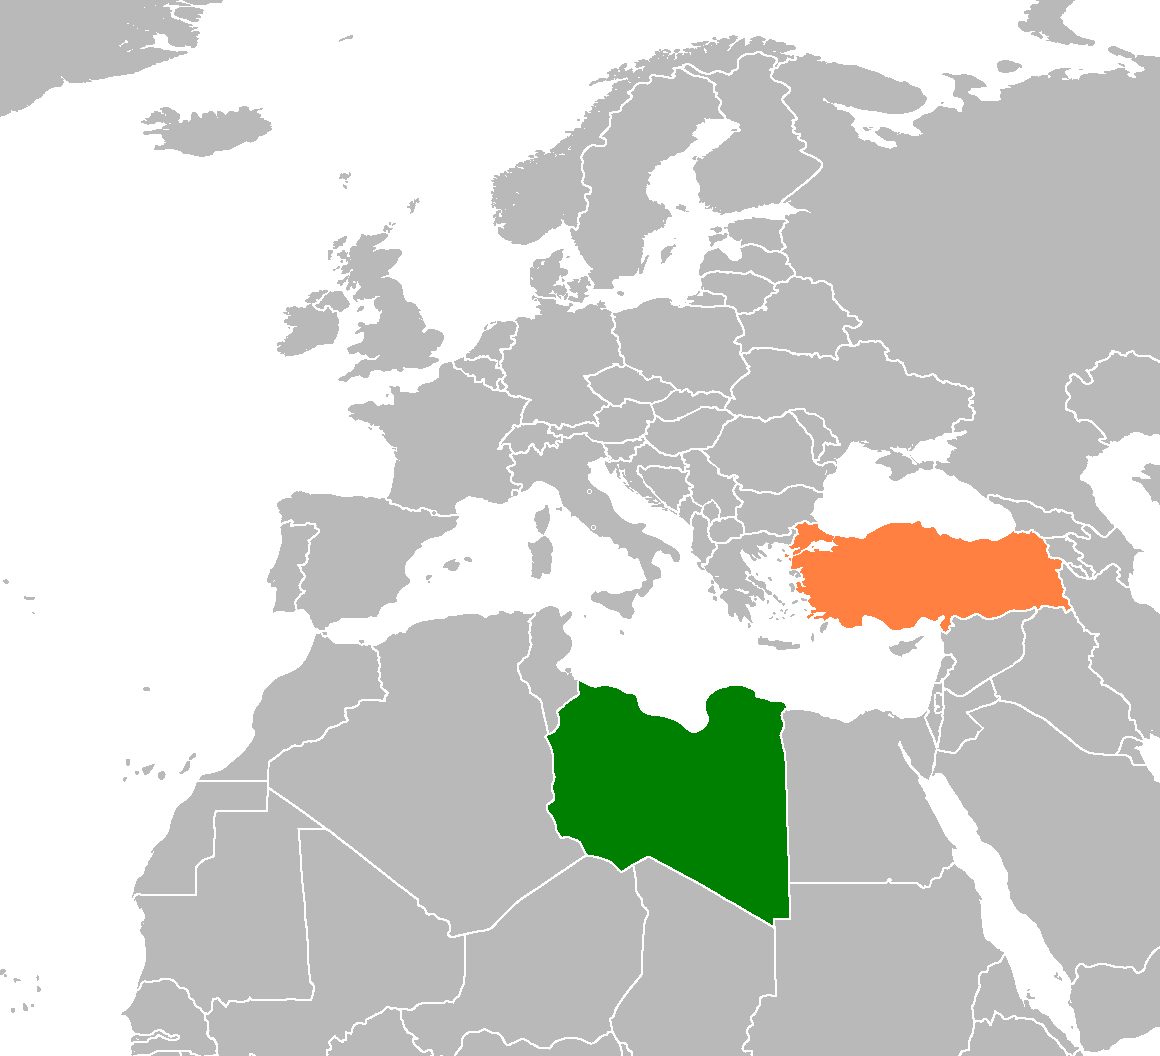 trade exchange between Turkey and Libya